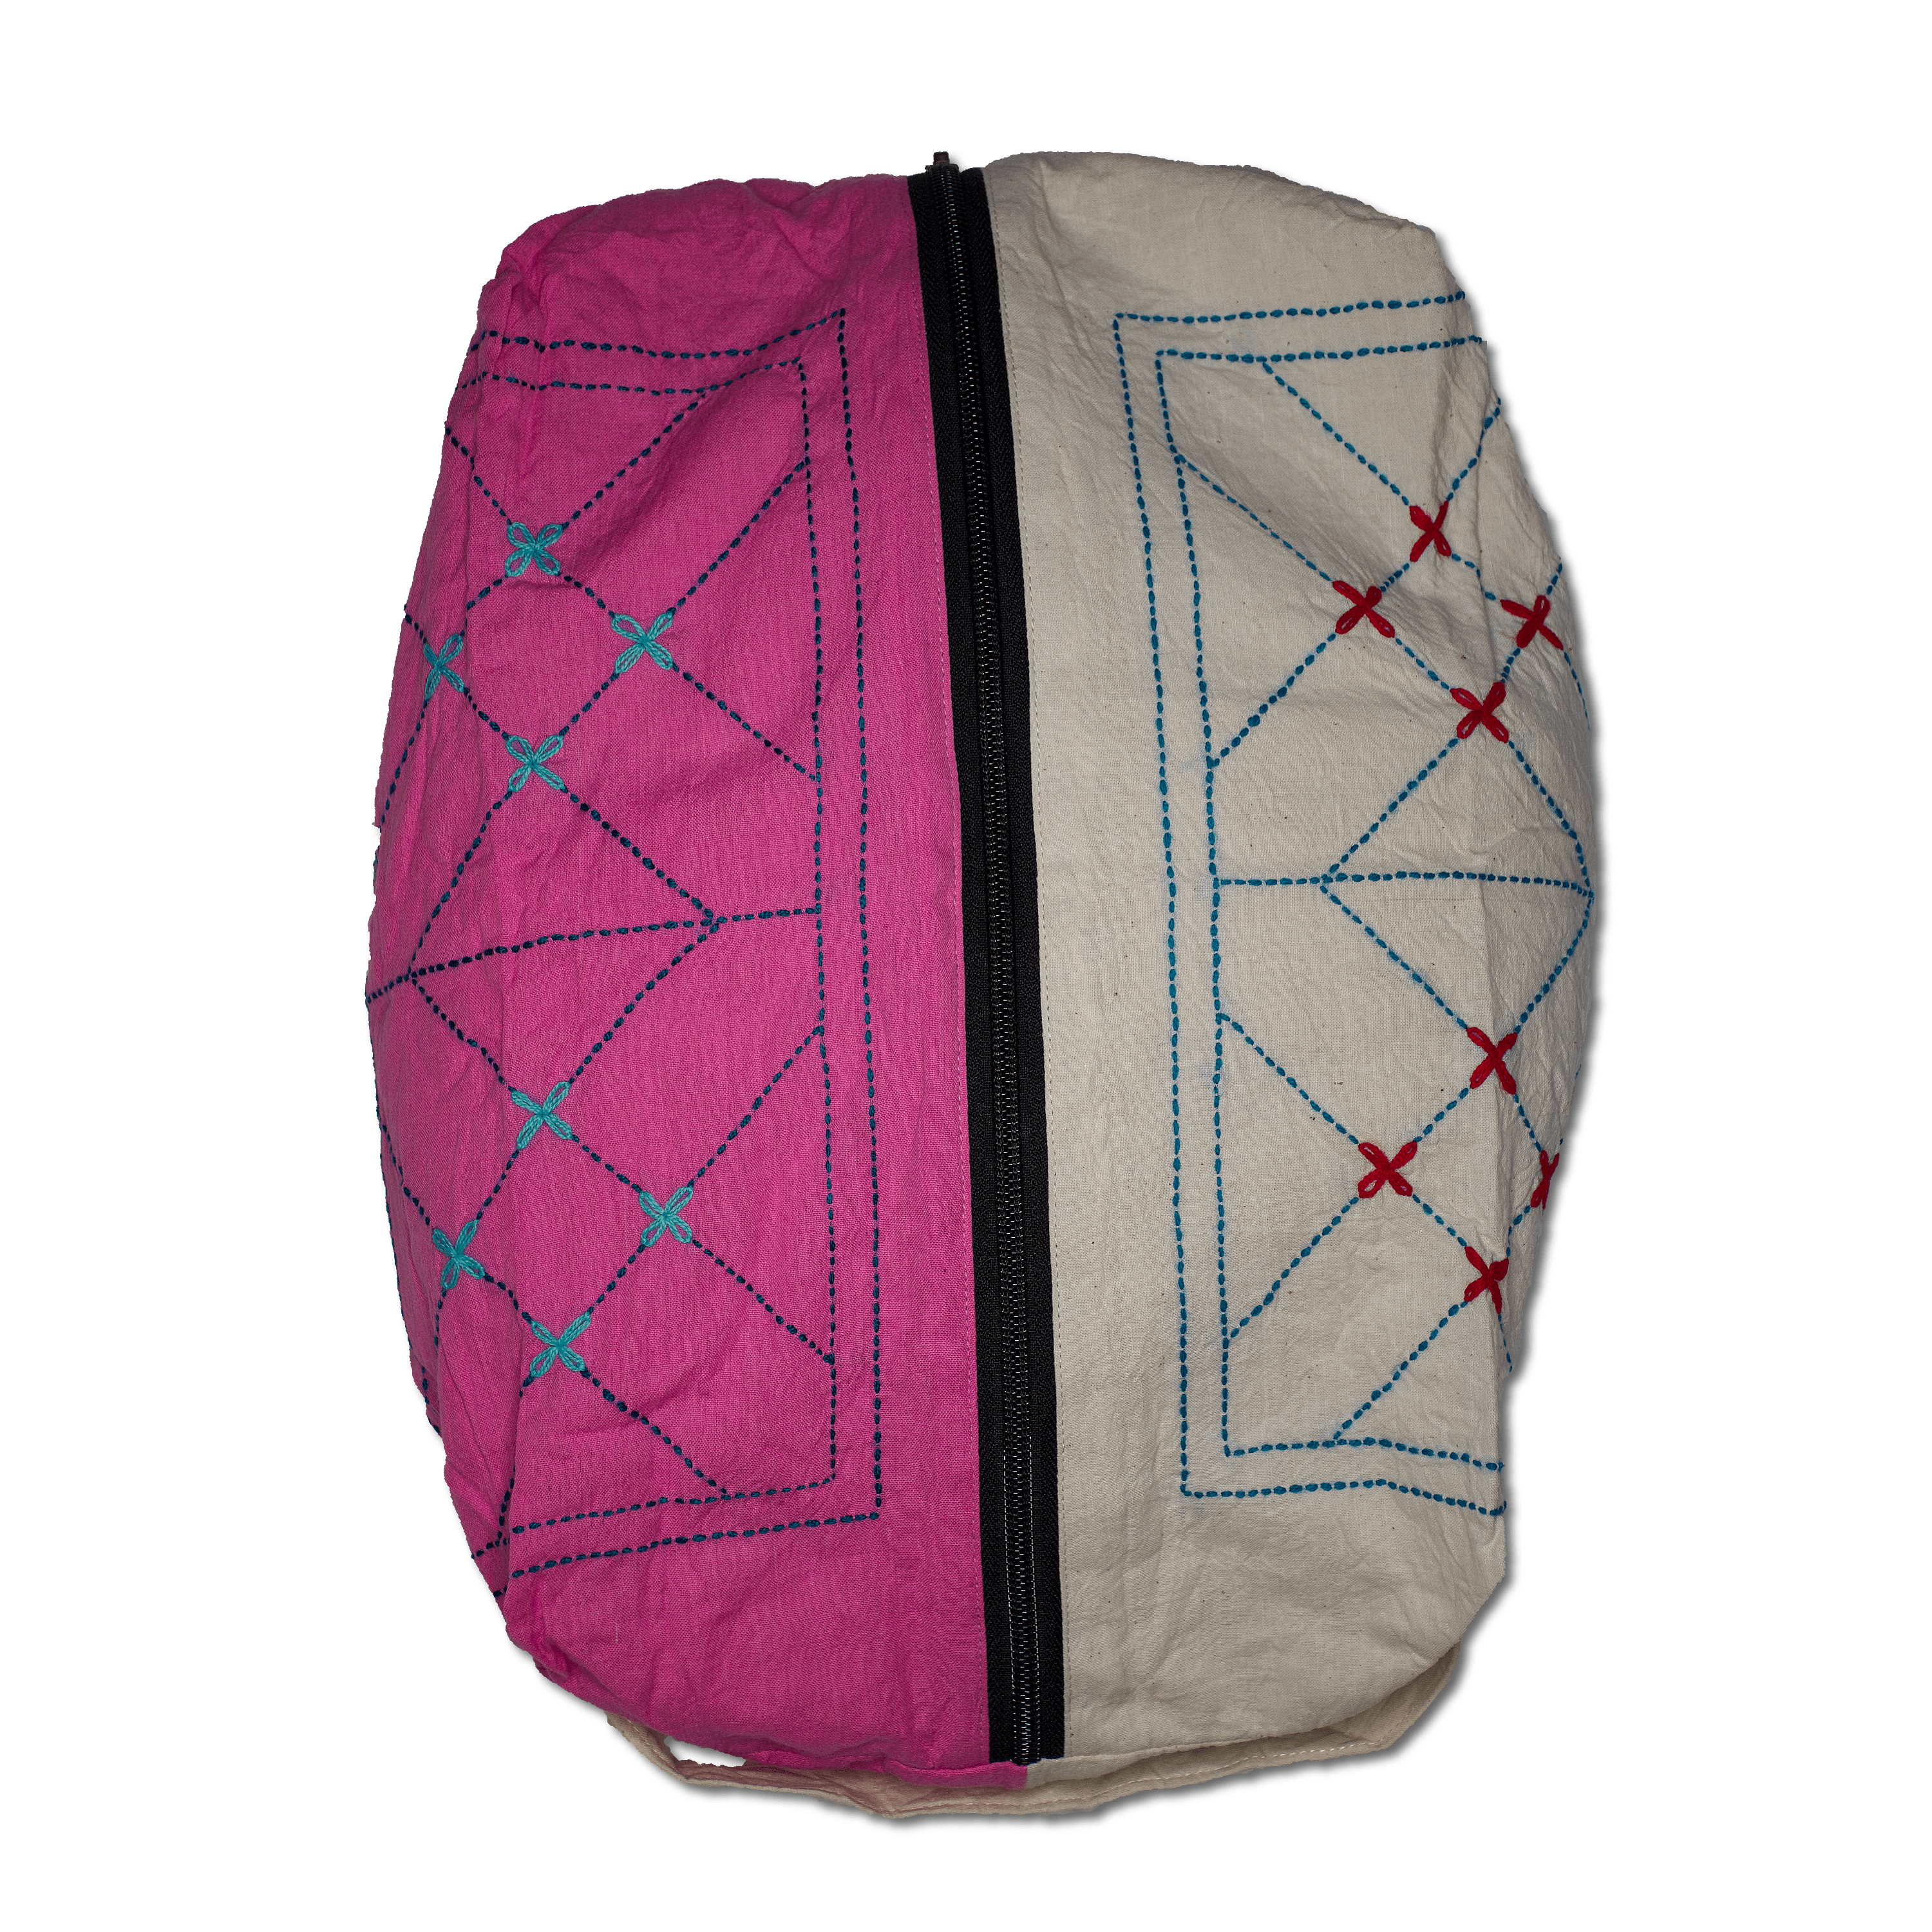 Pouch Bags - Kurigram (geometric) Design - Shopna (Pink) / Asfara (White)